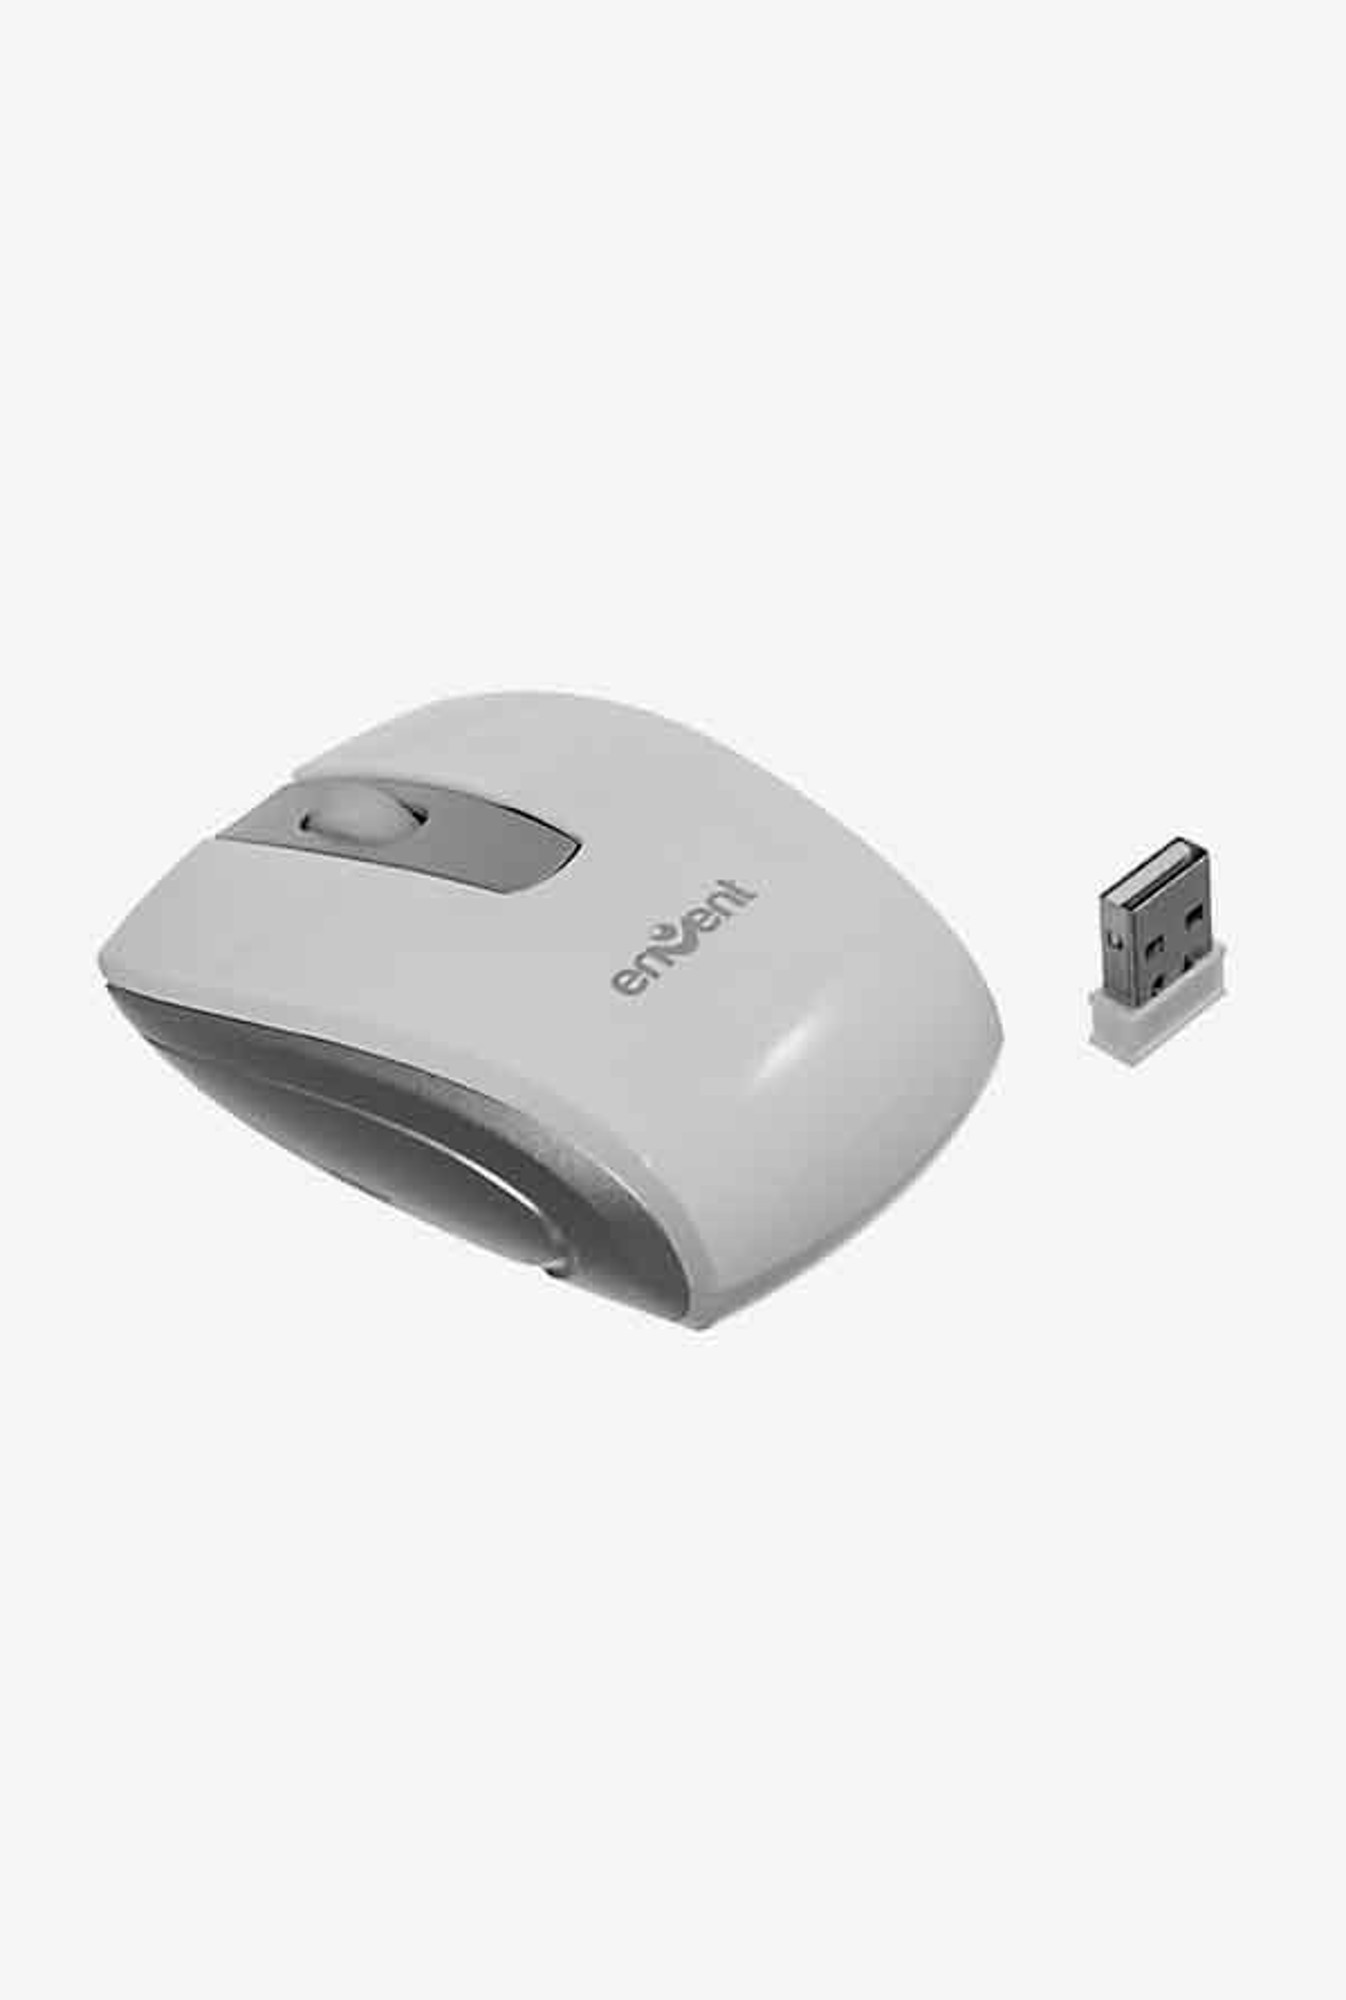 Envent ET-MW049 1000 DPI Wireless Mouse (White)